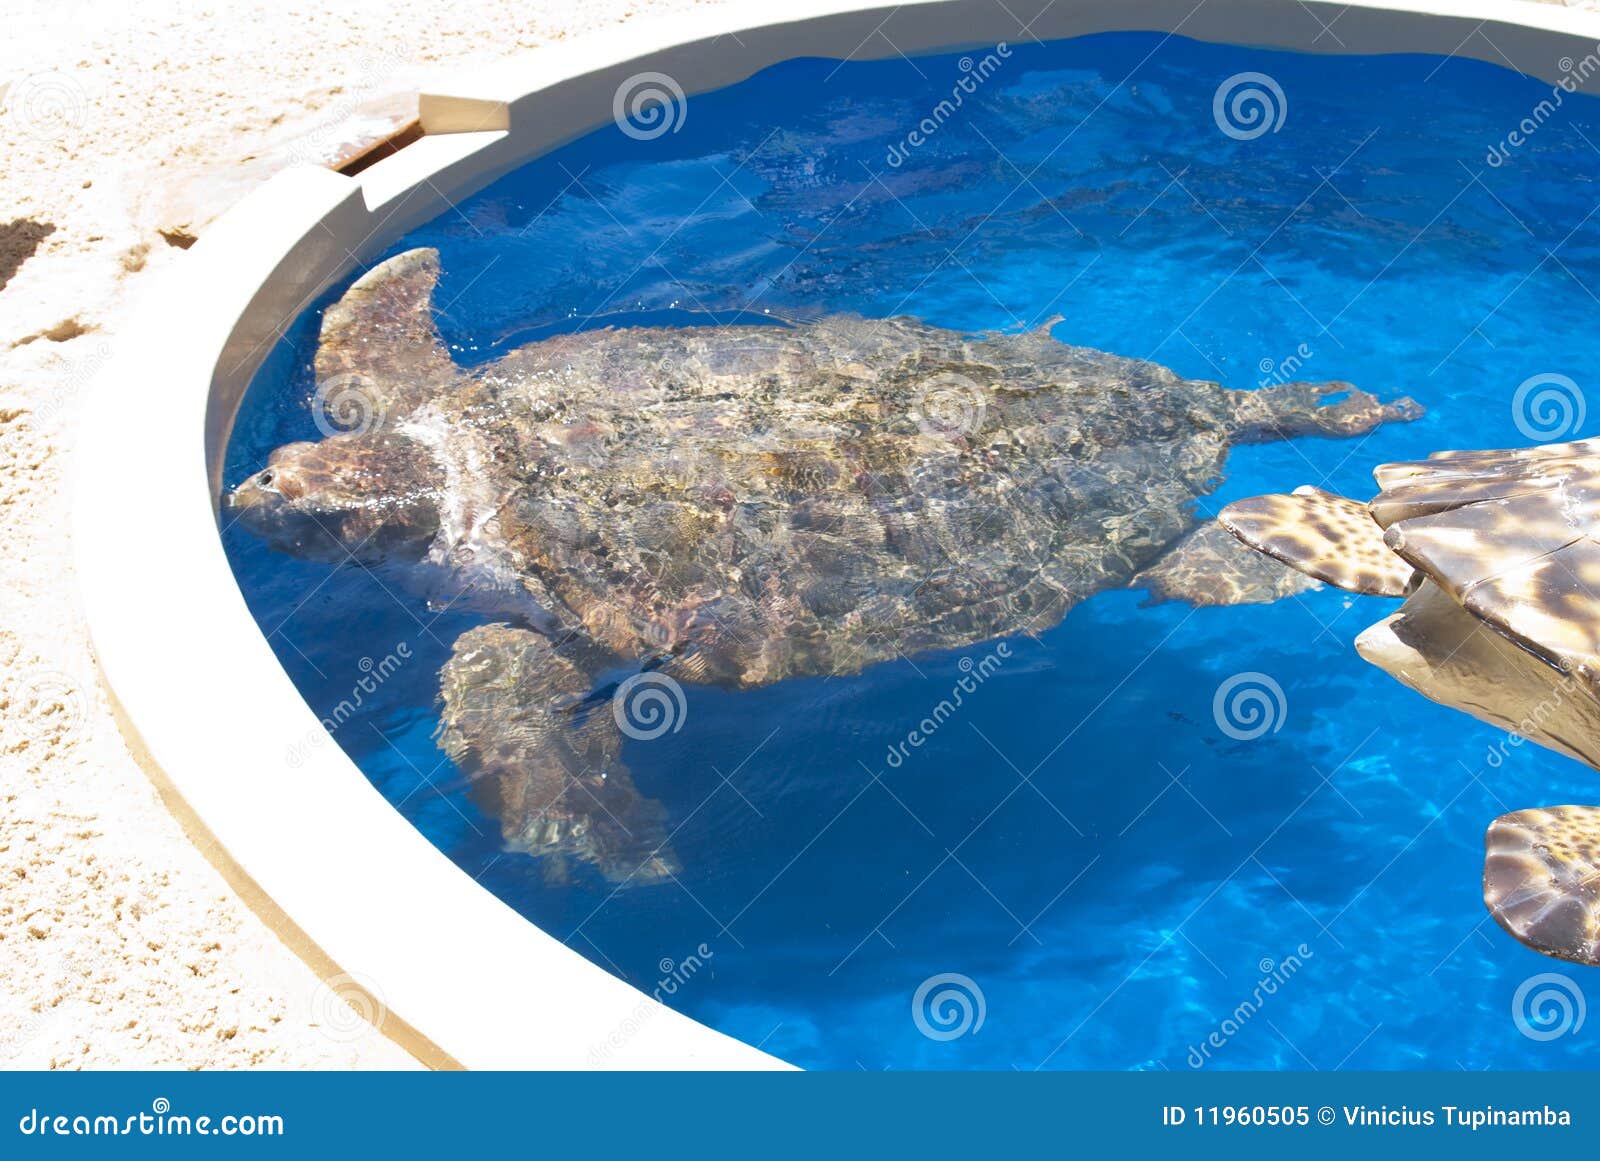 turtle in captivity